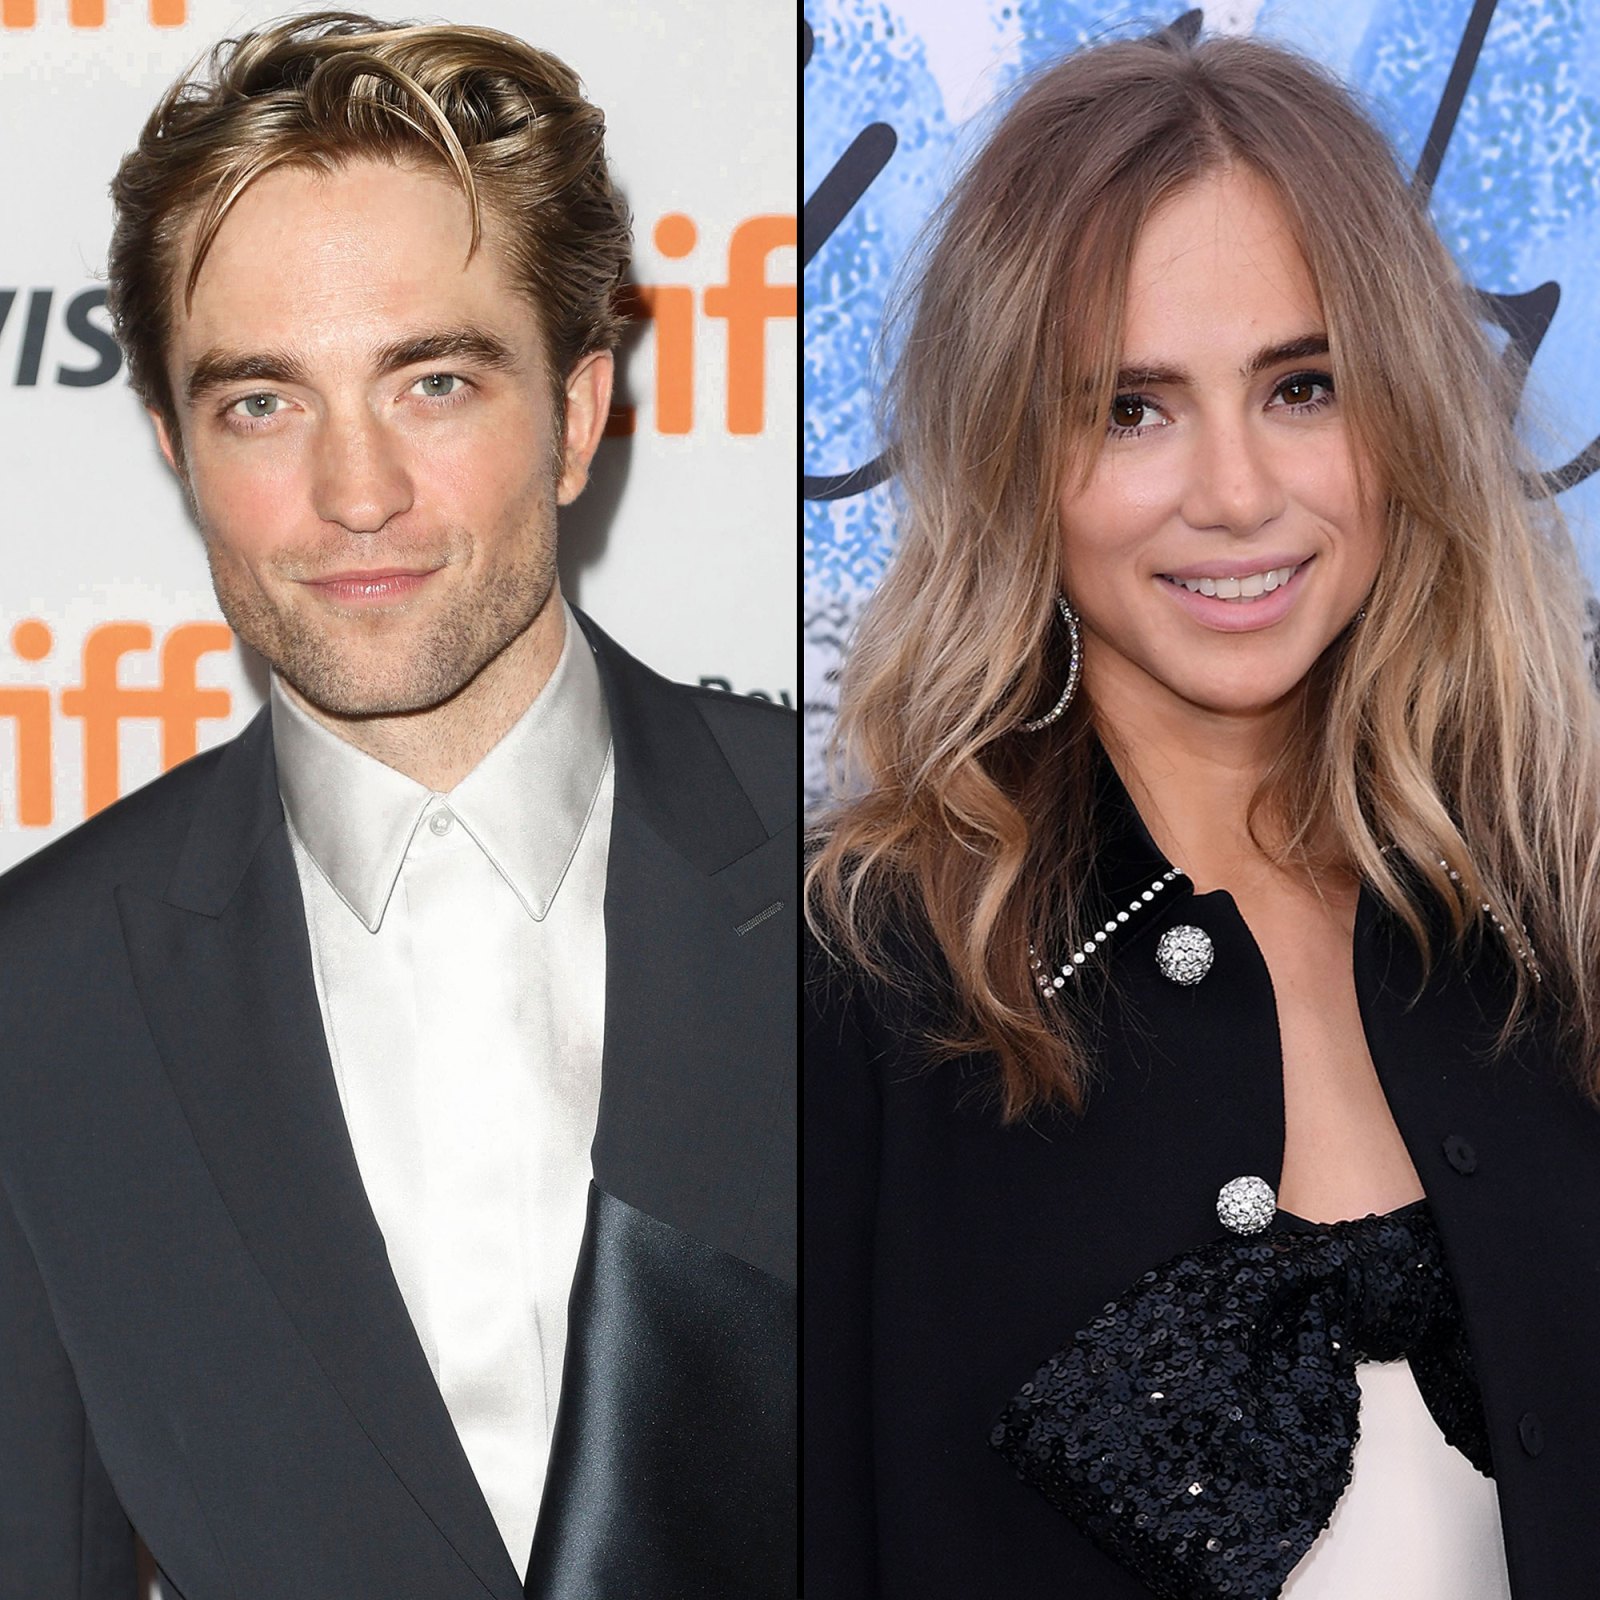 Wife Sharing Key Party Videos - Robert Pattinson, Suki Waterhouse's Relationship Timeline: Photos